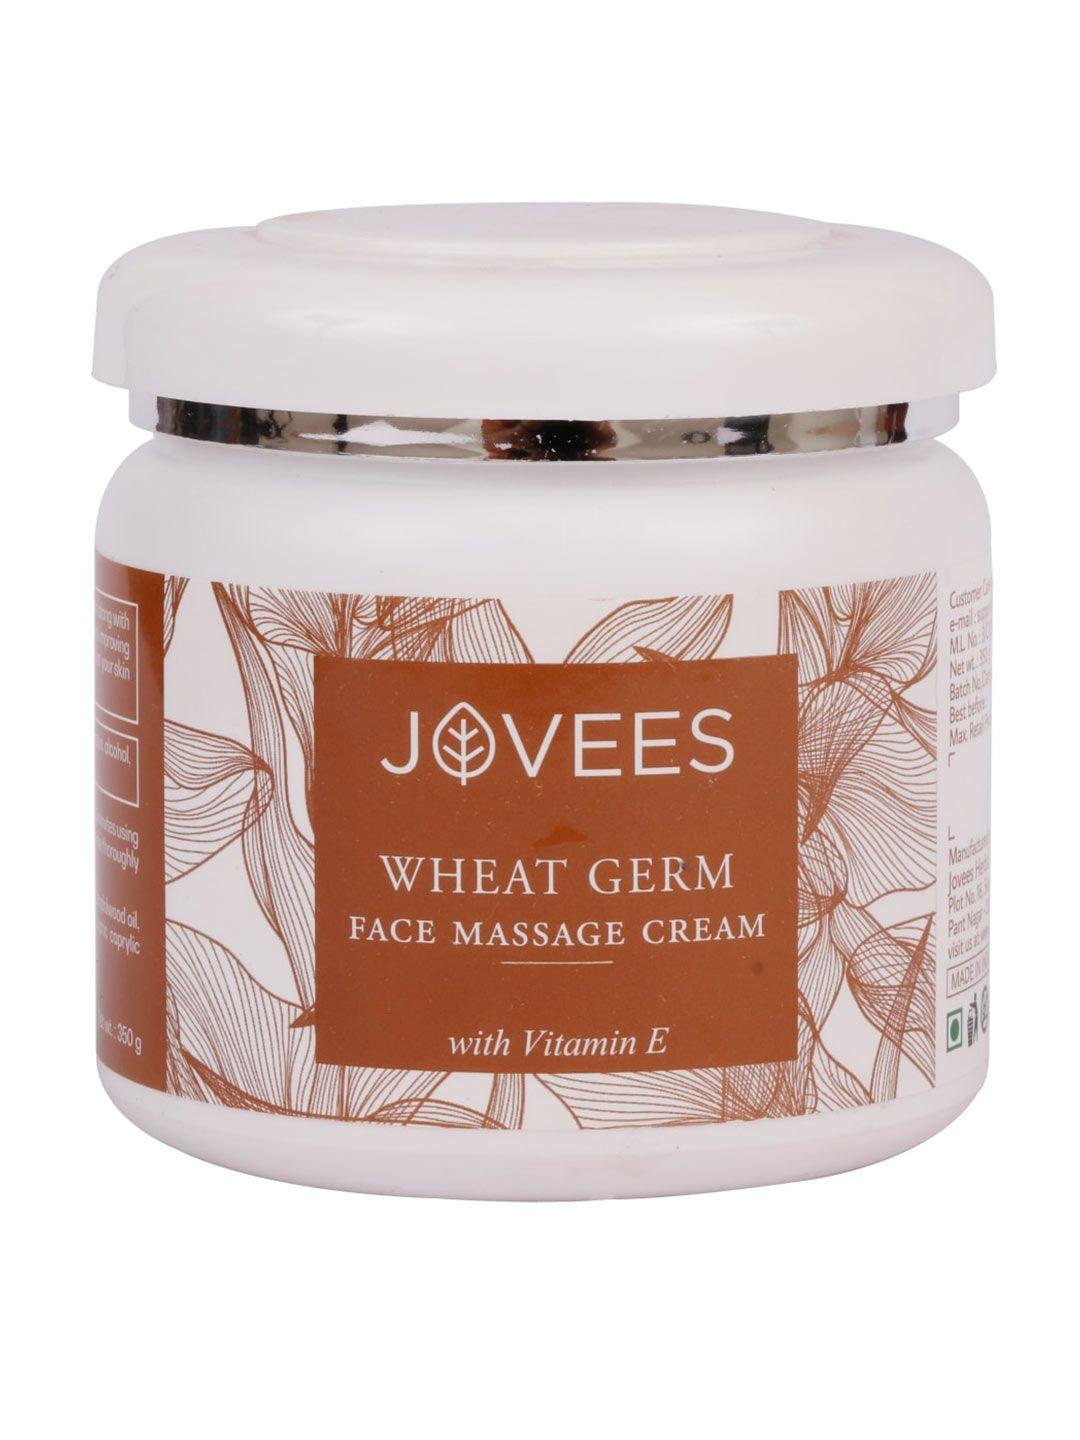 jovees wheat germ face massage cream with vitamin e - 350 g